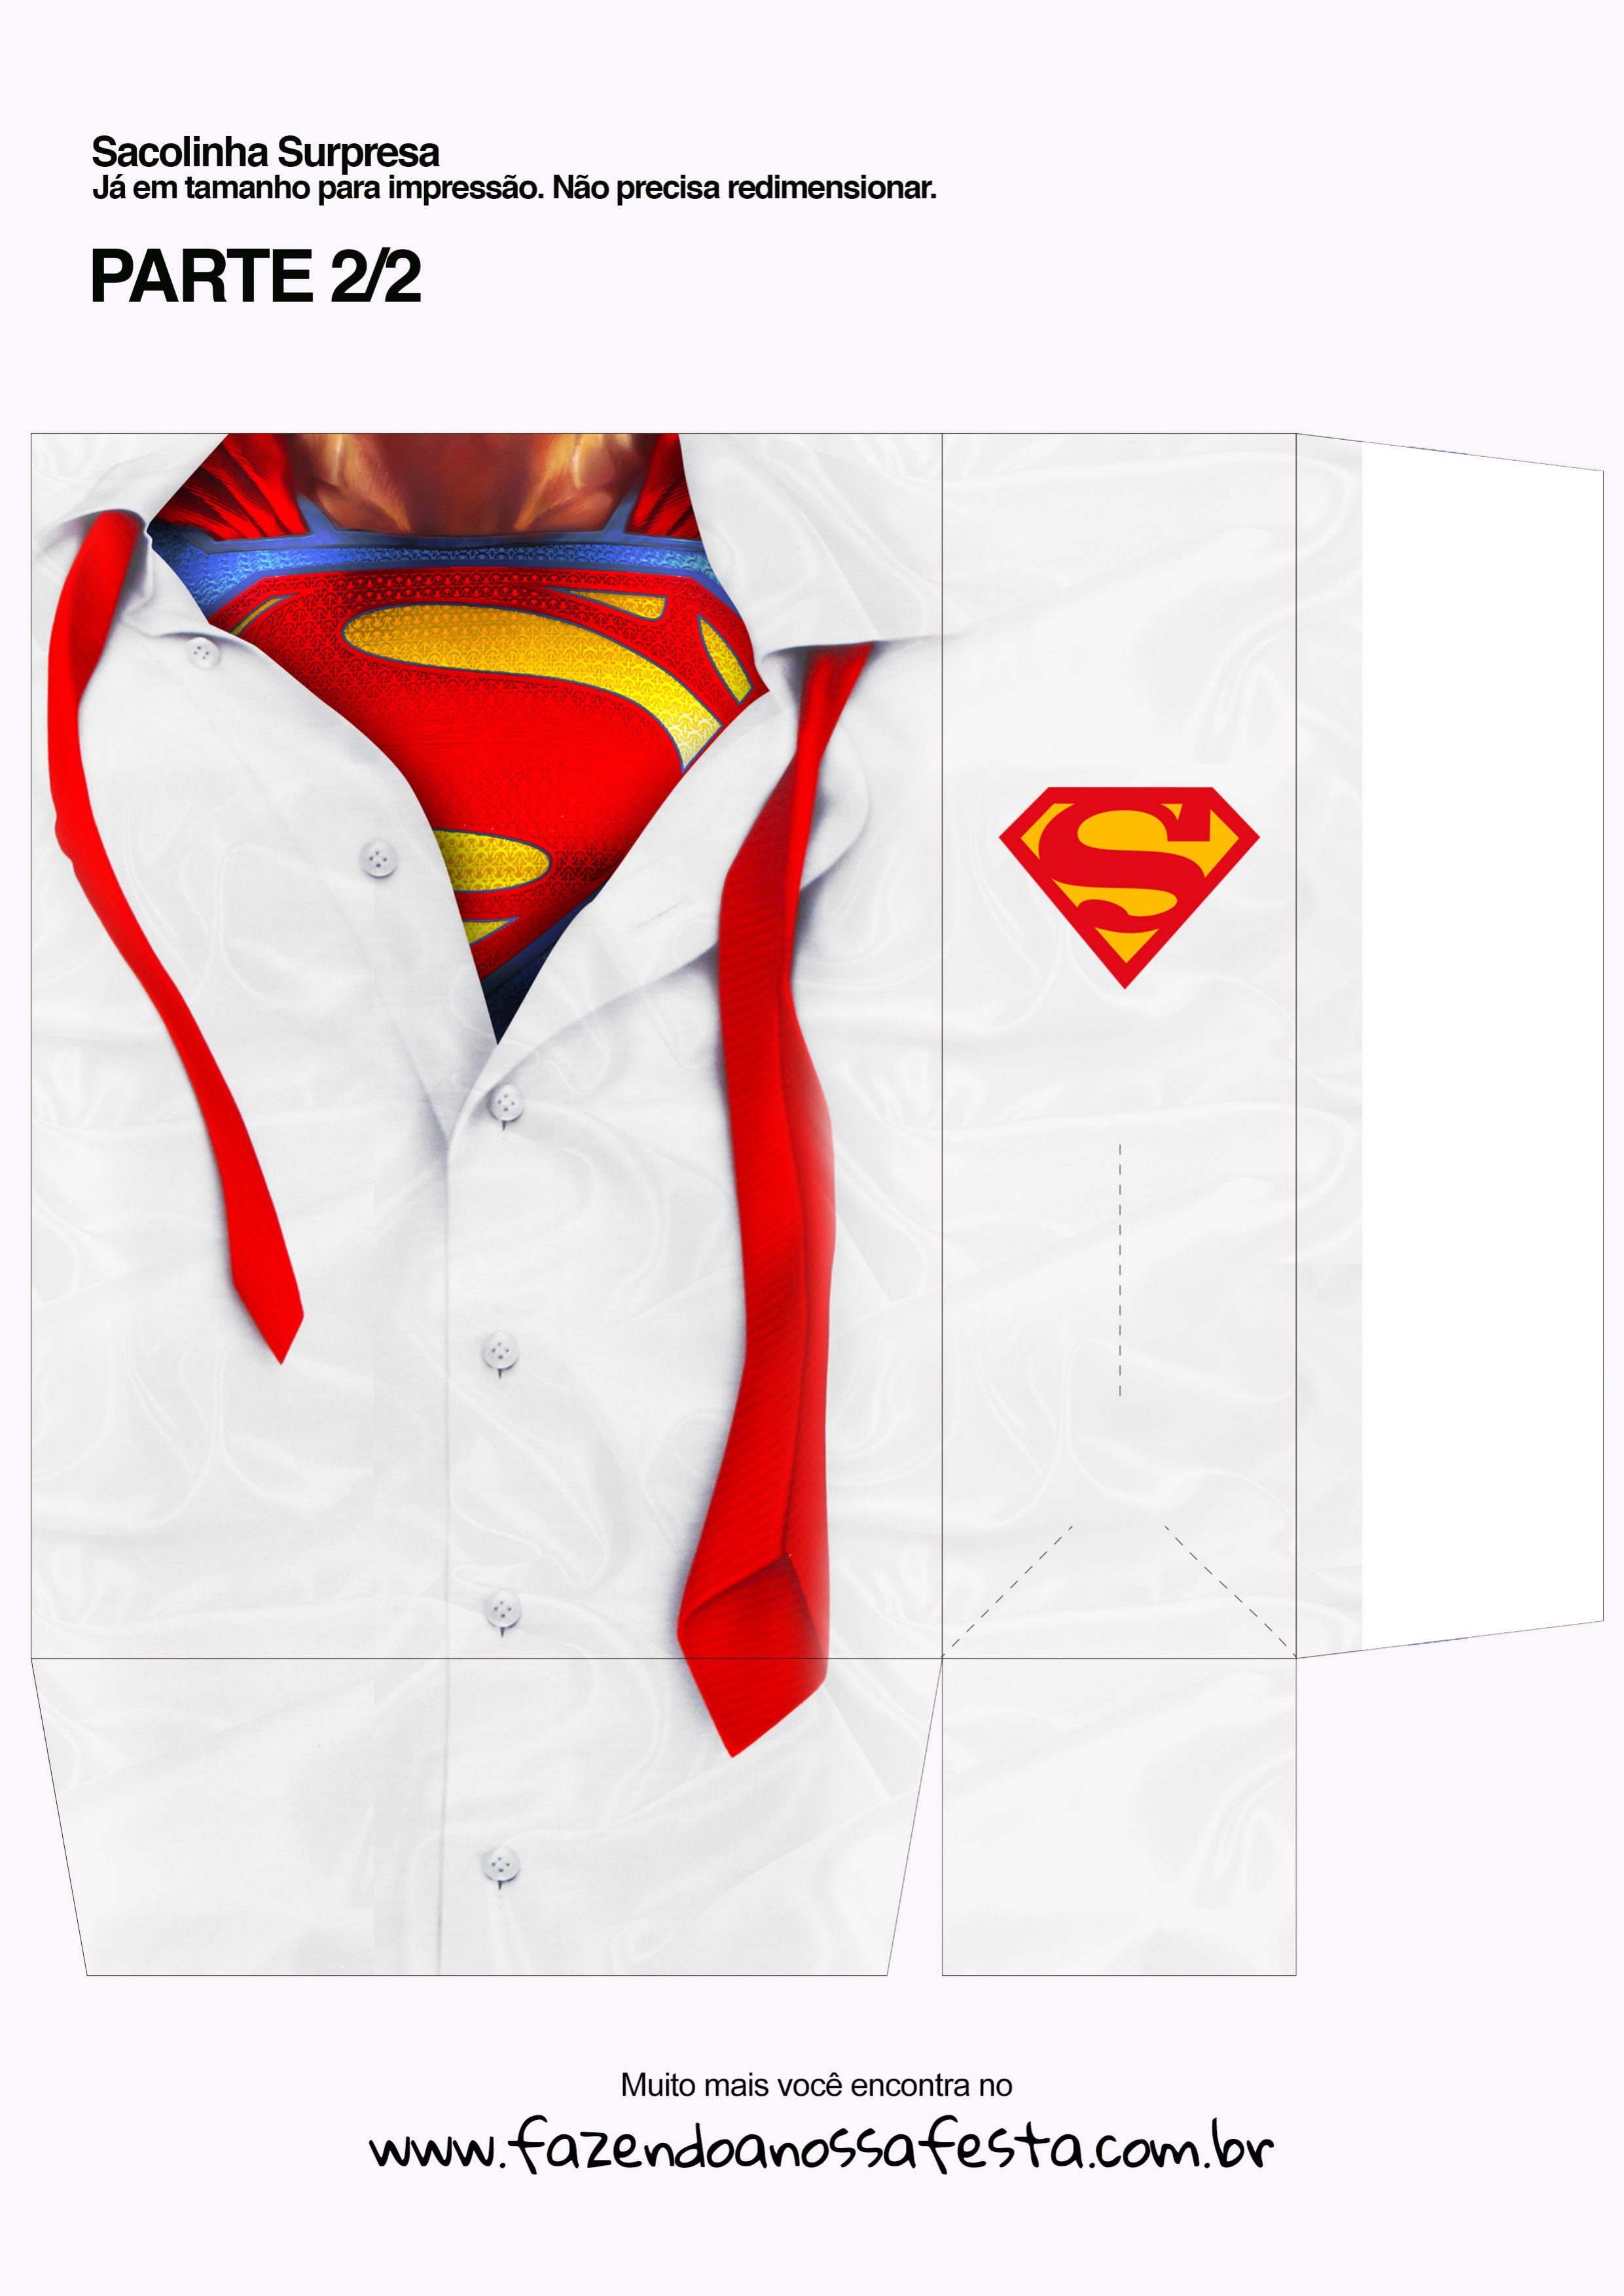 Sacolinha Surpresa Kit Super Pai Camisa parte 2